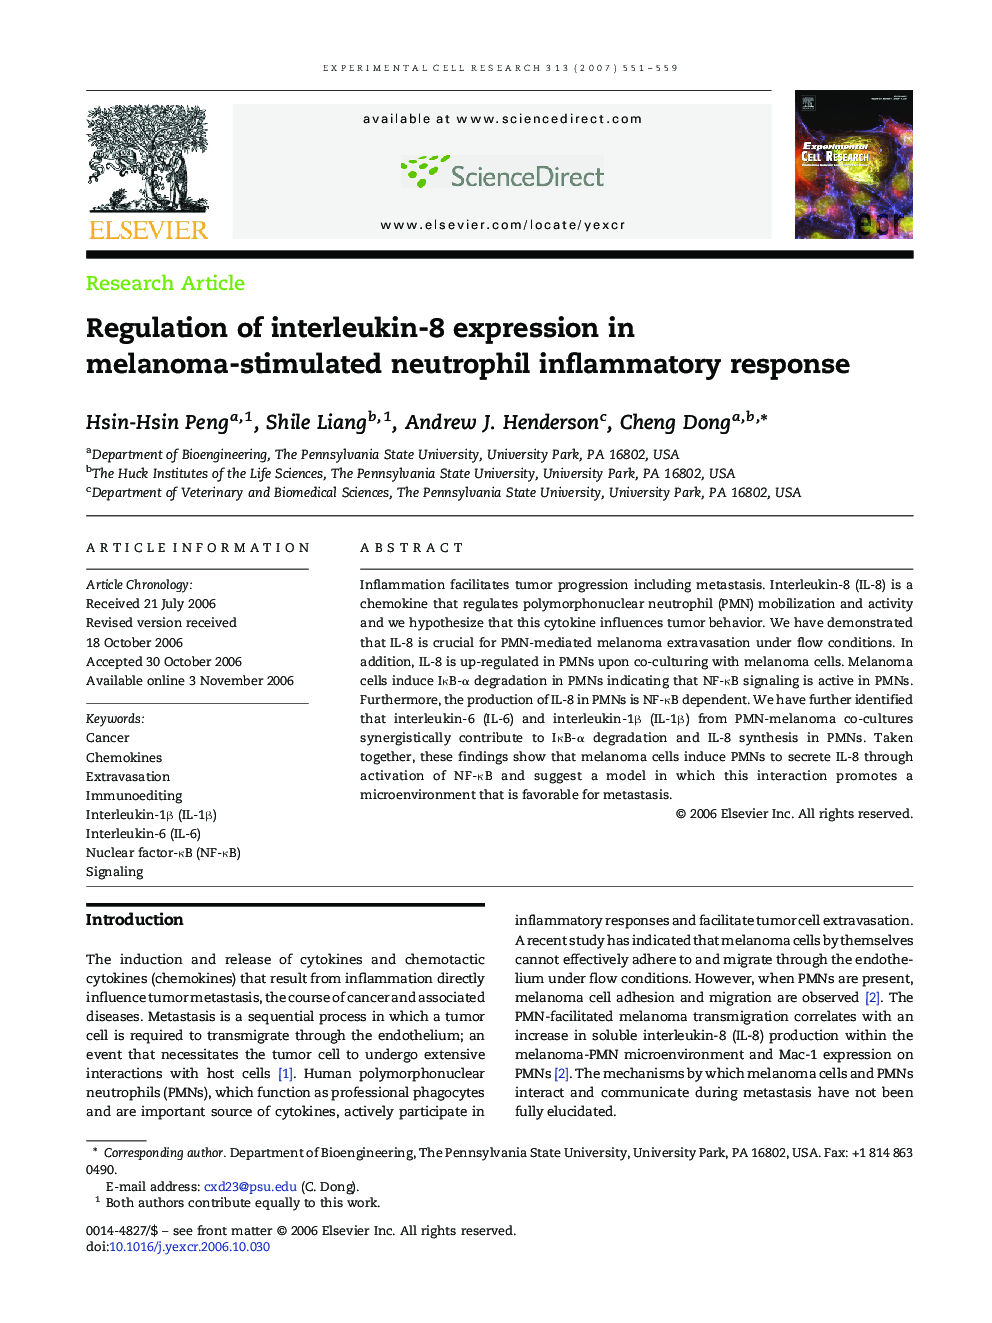 Regulation of interleukin-8 expression in melanoma-stimulated neutrophil inflammatory response